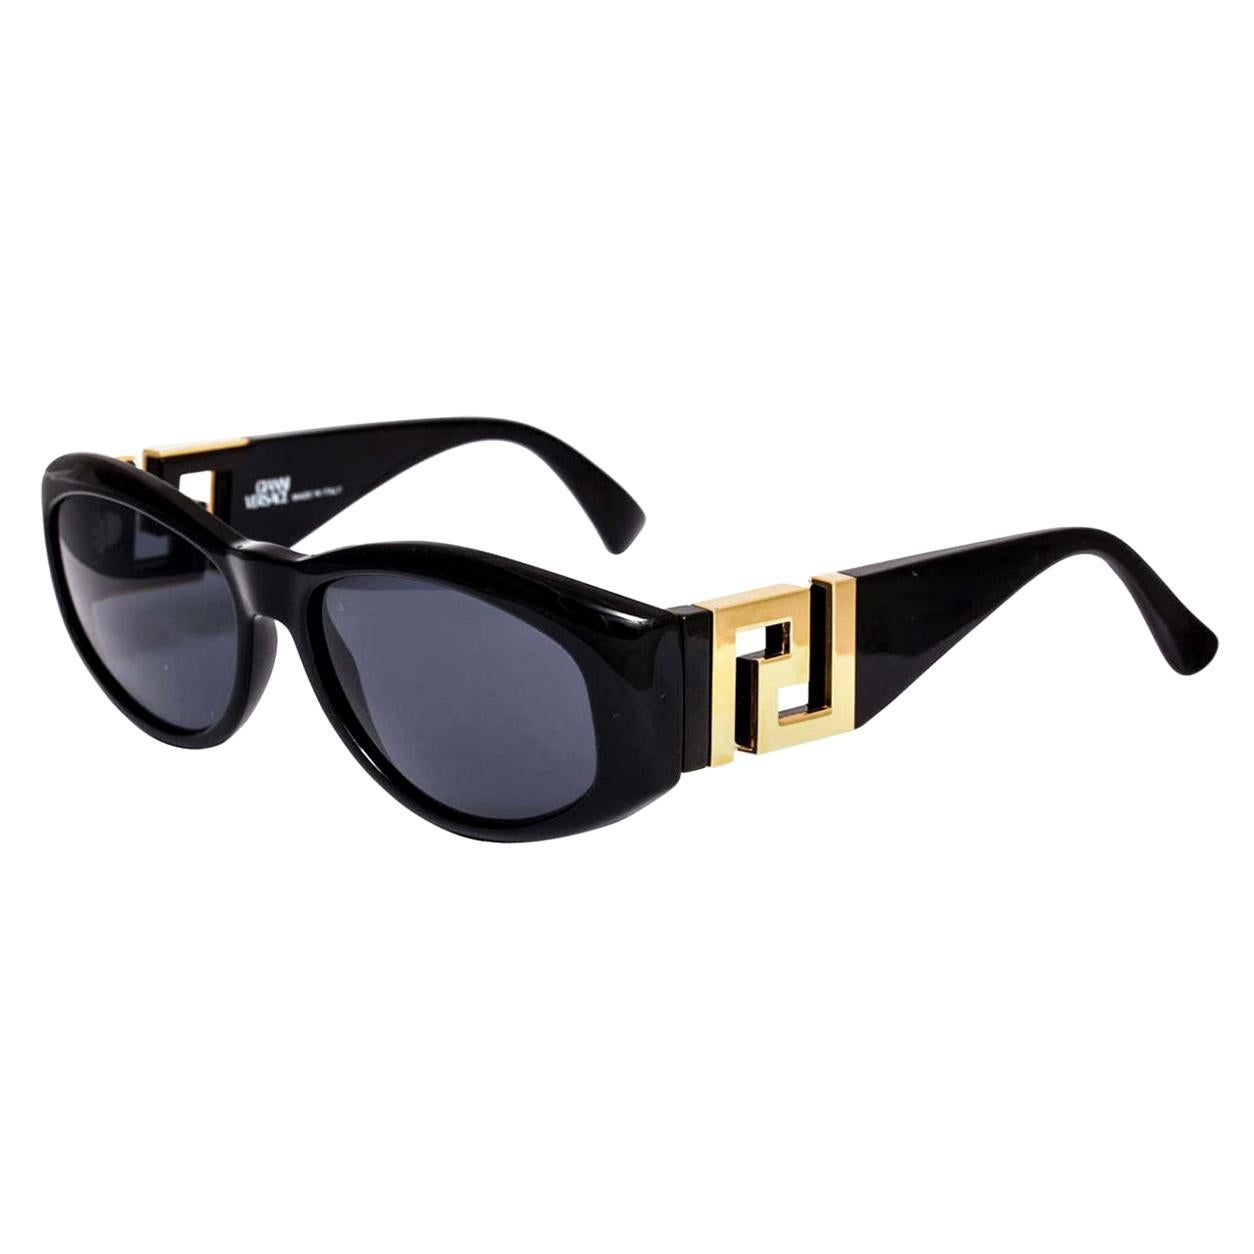 Vintage Gianni Versace Sunglasses Mod T24 Col 852 For Sale